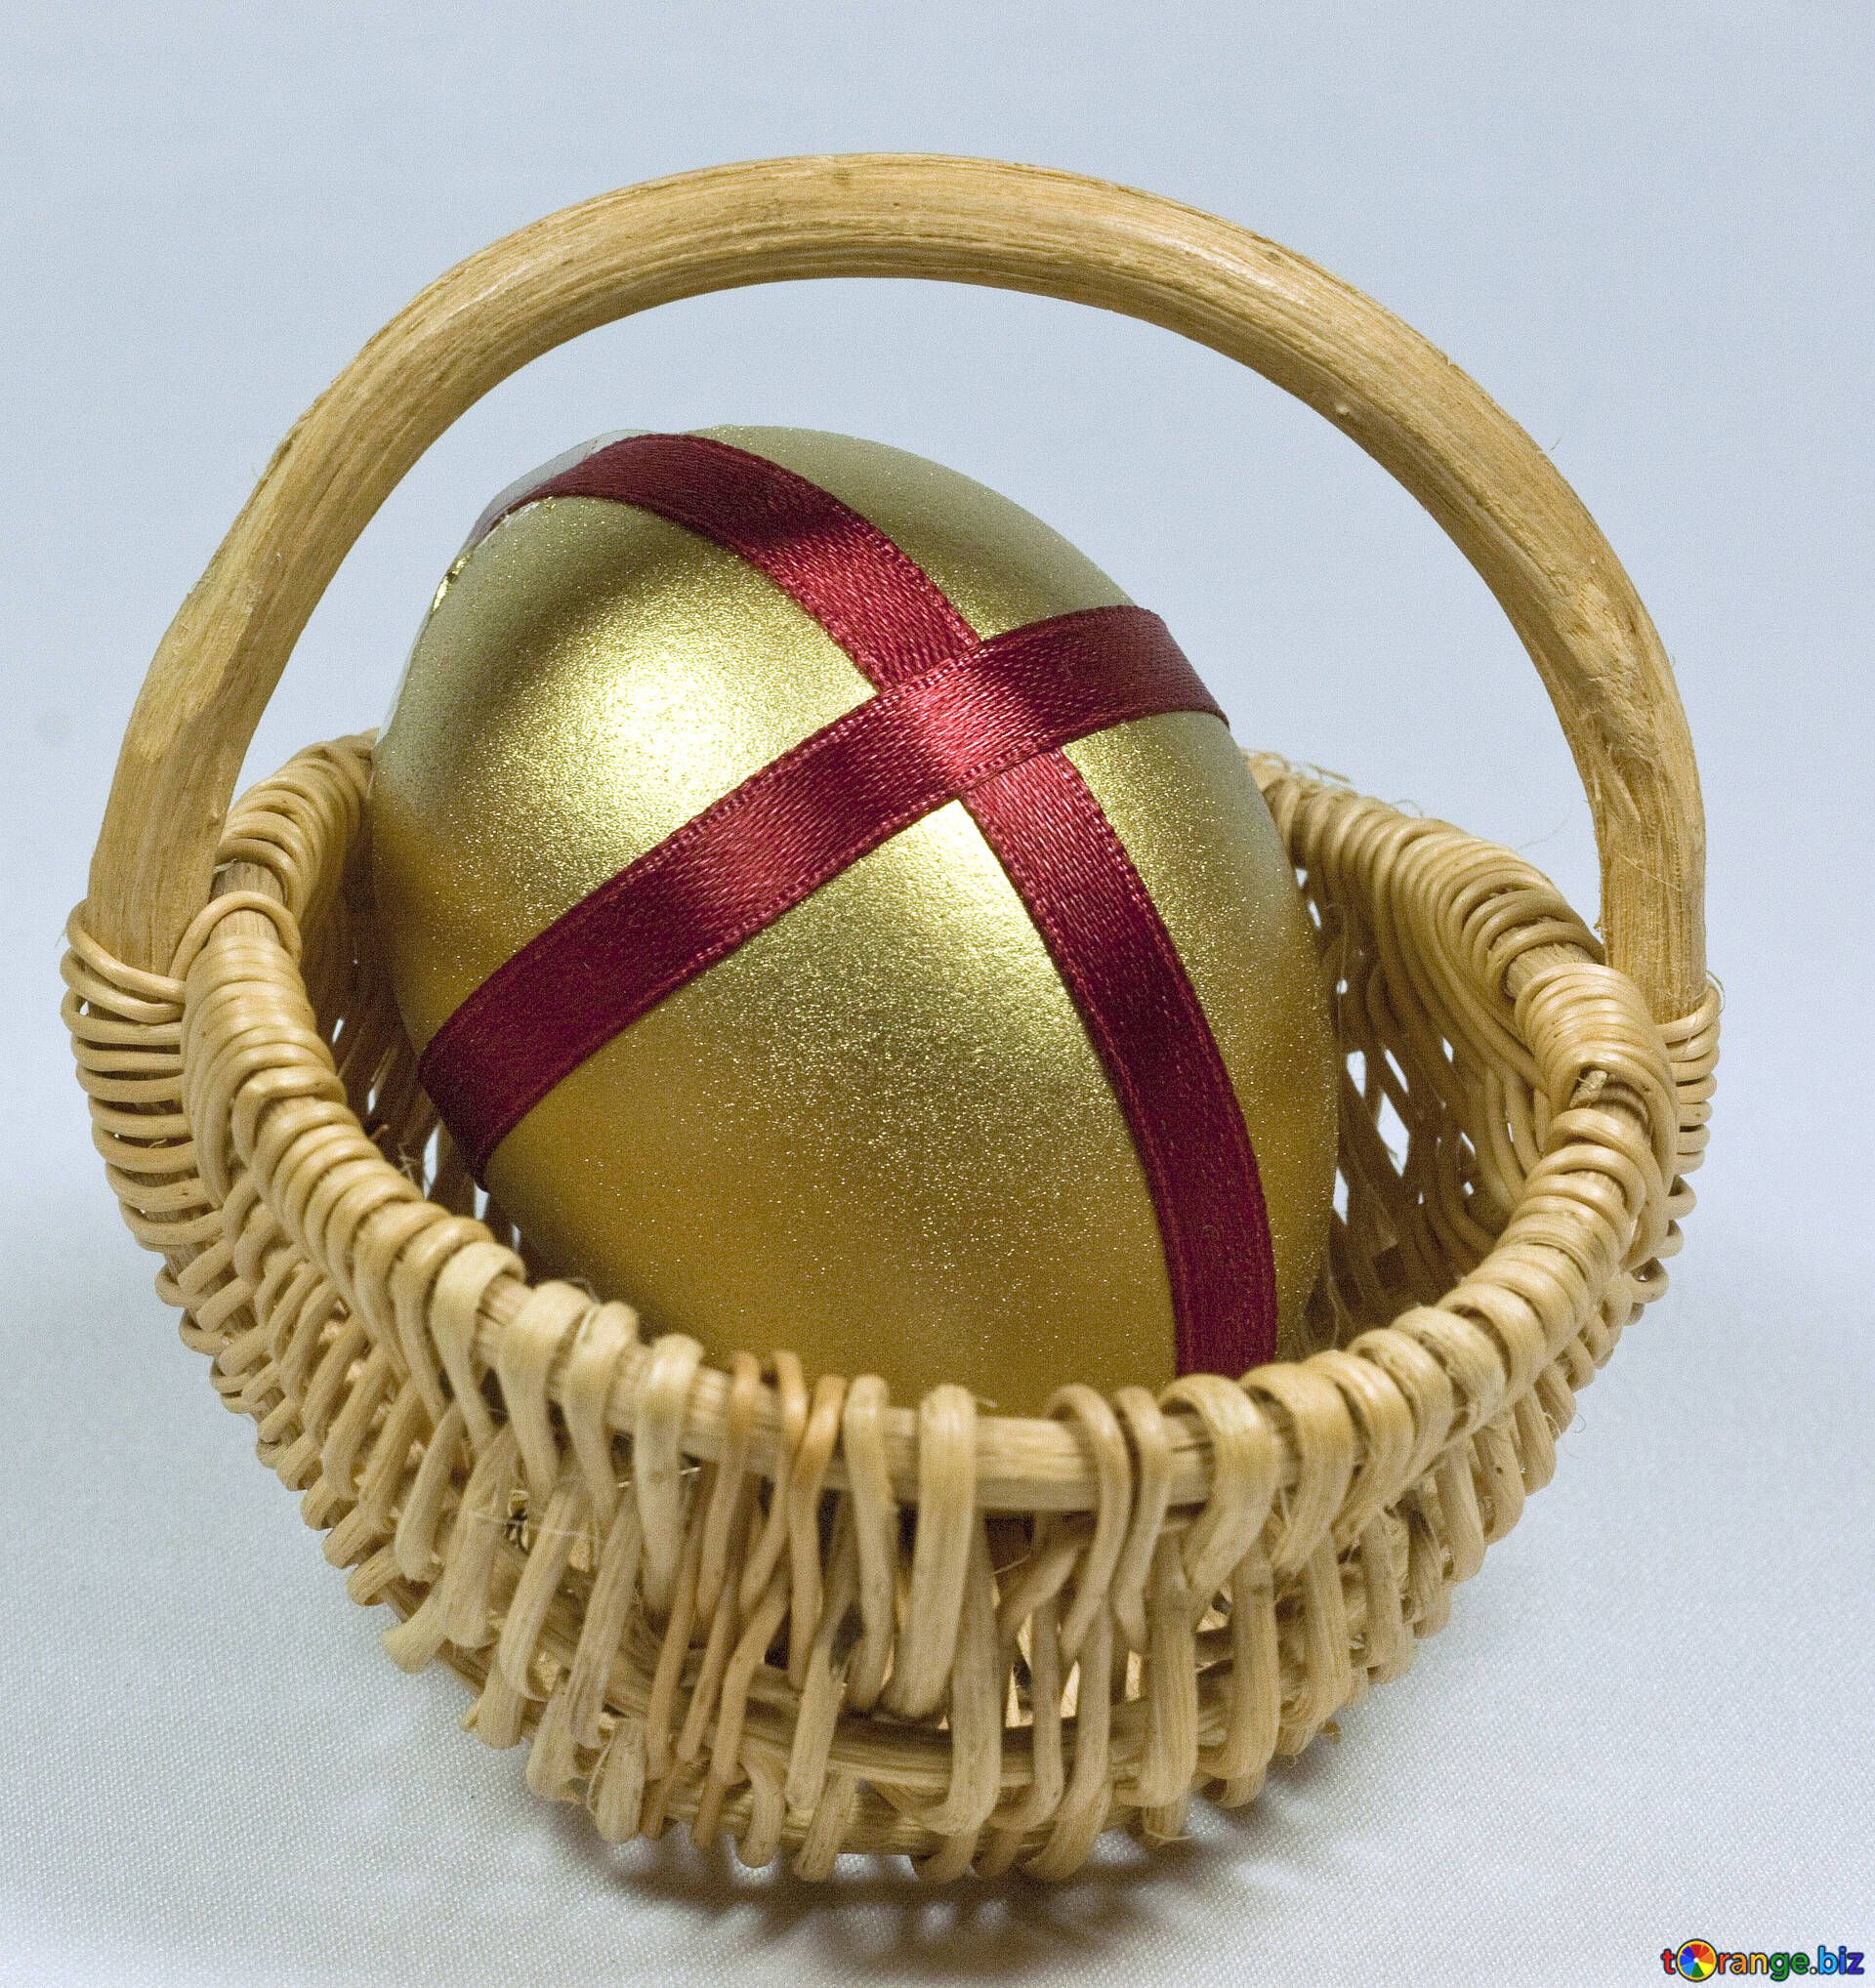 Golden Eggs Image Easter Egg Image Gold № 8108. Torange.biz Free Pics On Cc By License